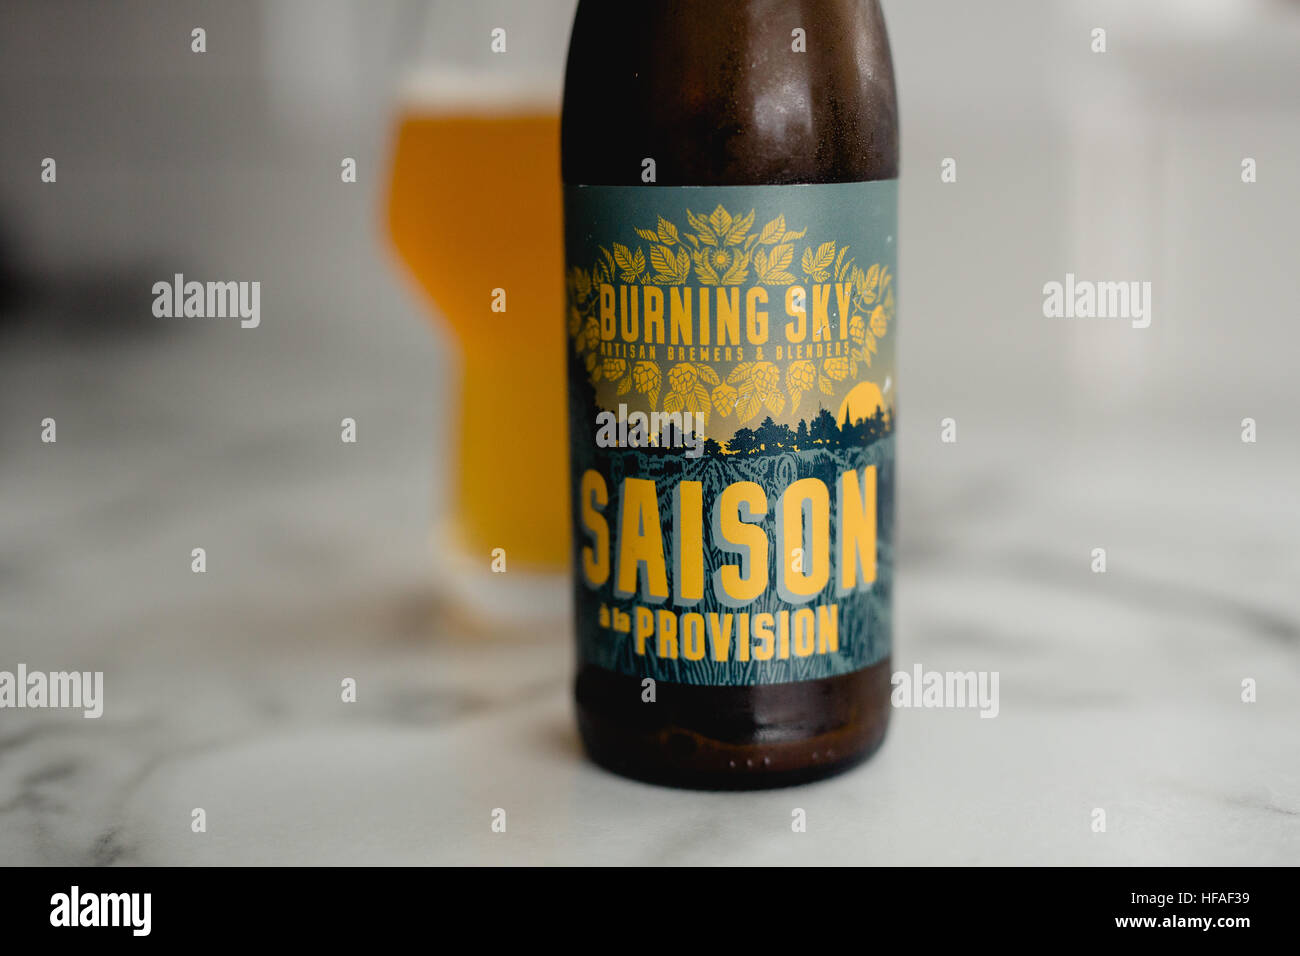 Burning Sky Saison de la Provision craft beer Stock Photo